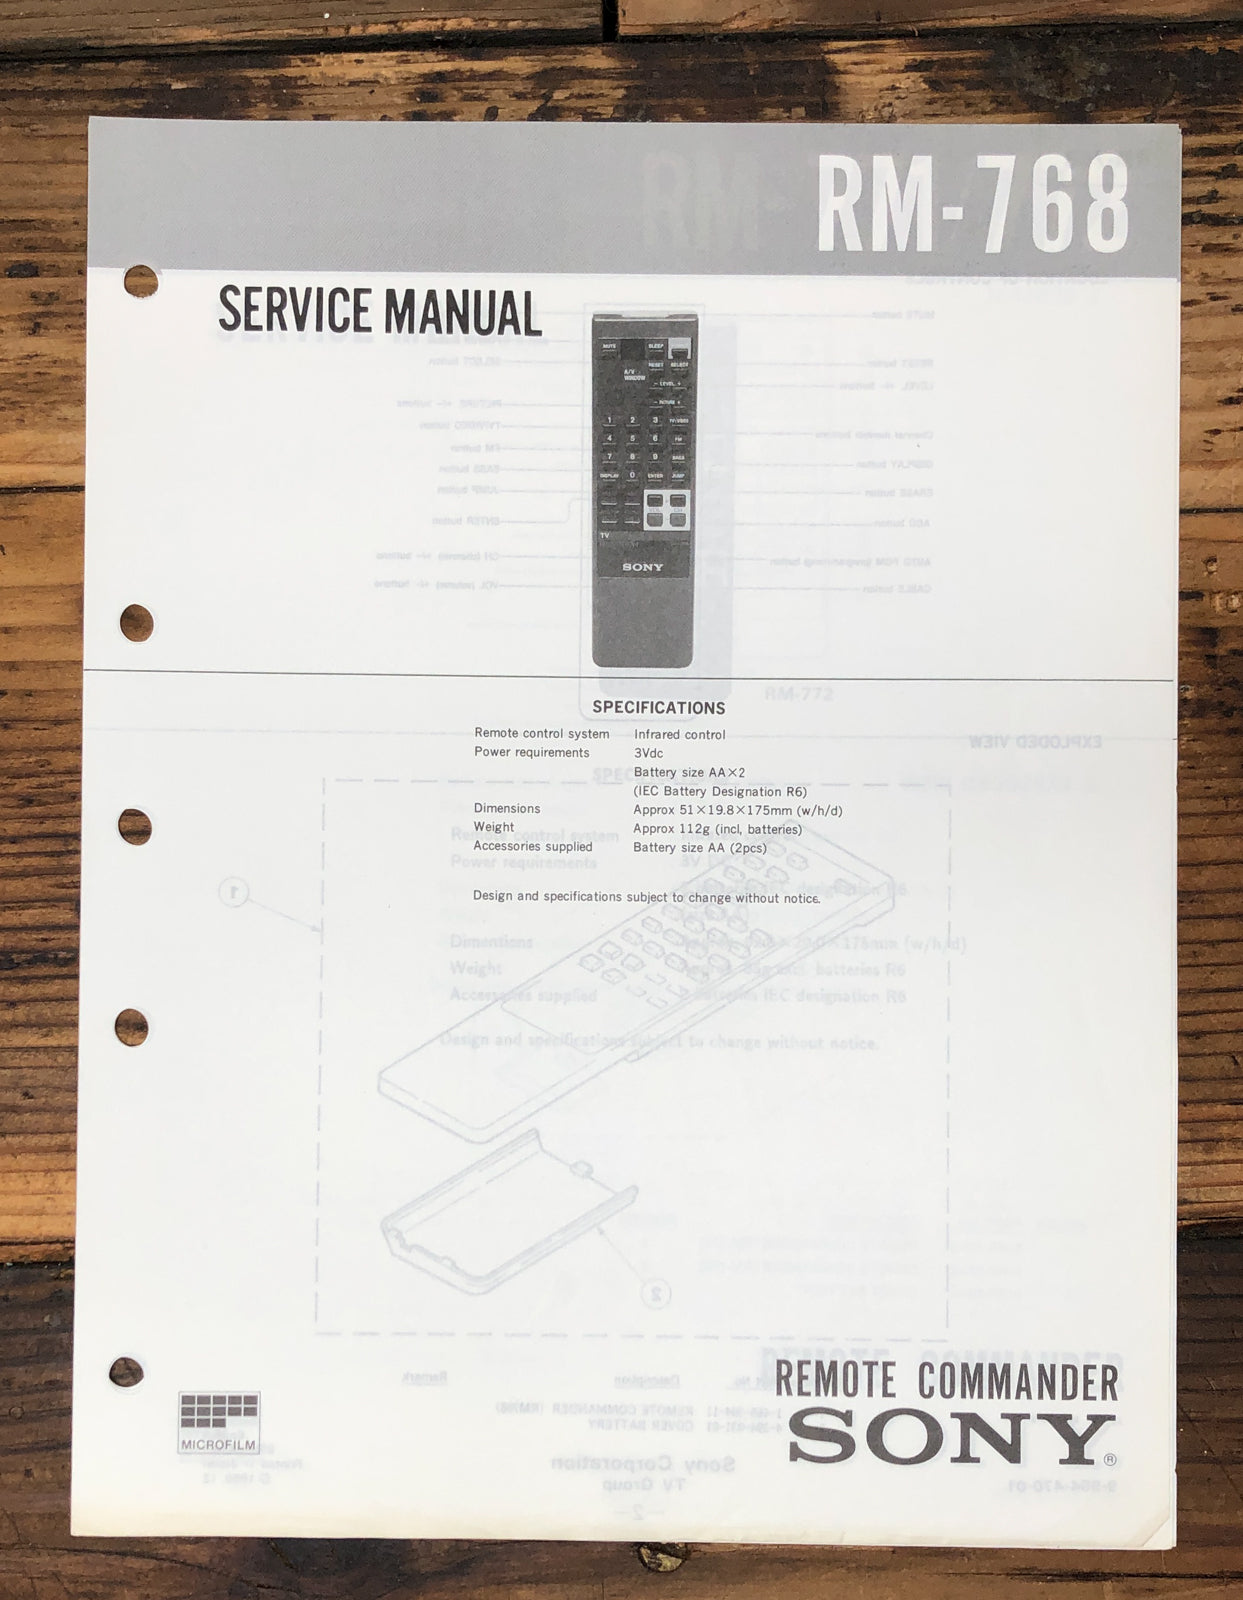 Sony RM-768 Remote Control  Service Manual *Original*